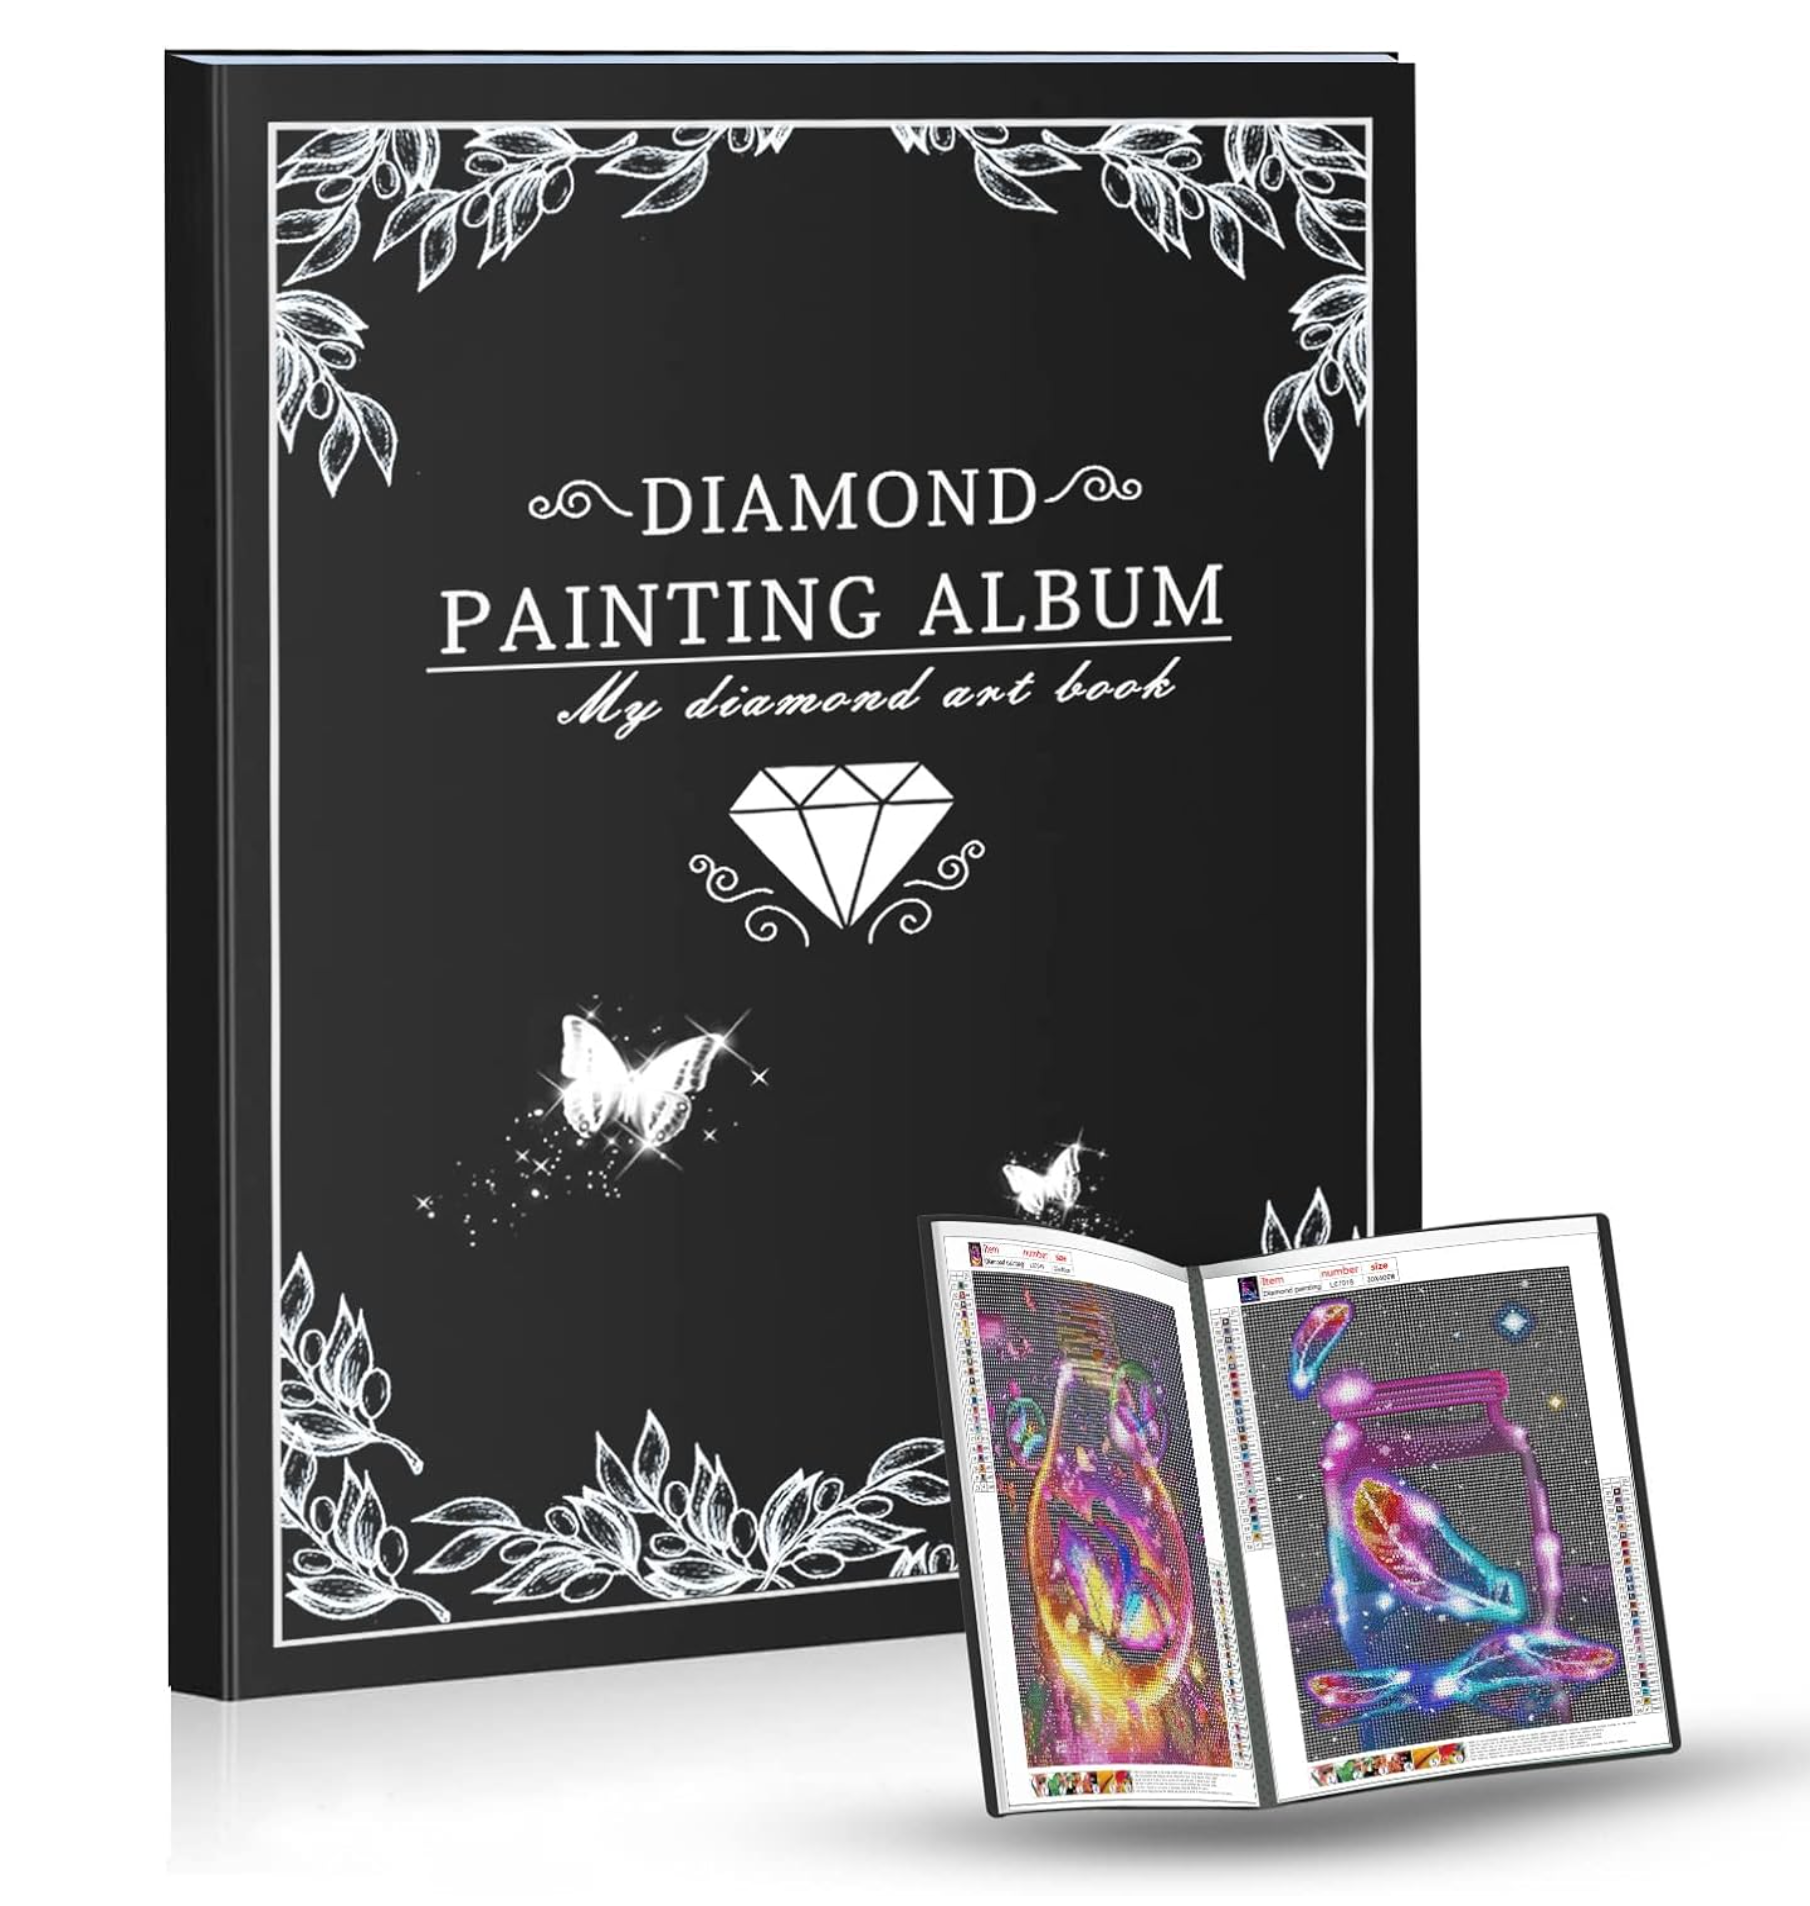 Diamond Painting Album (Morgen in huis) https://tinyurl.com/388tva67